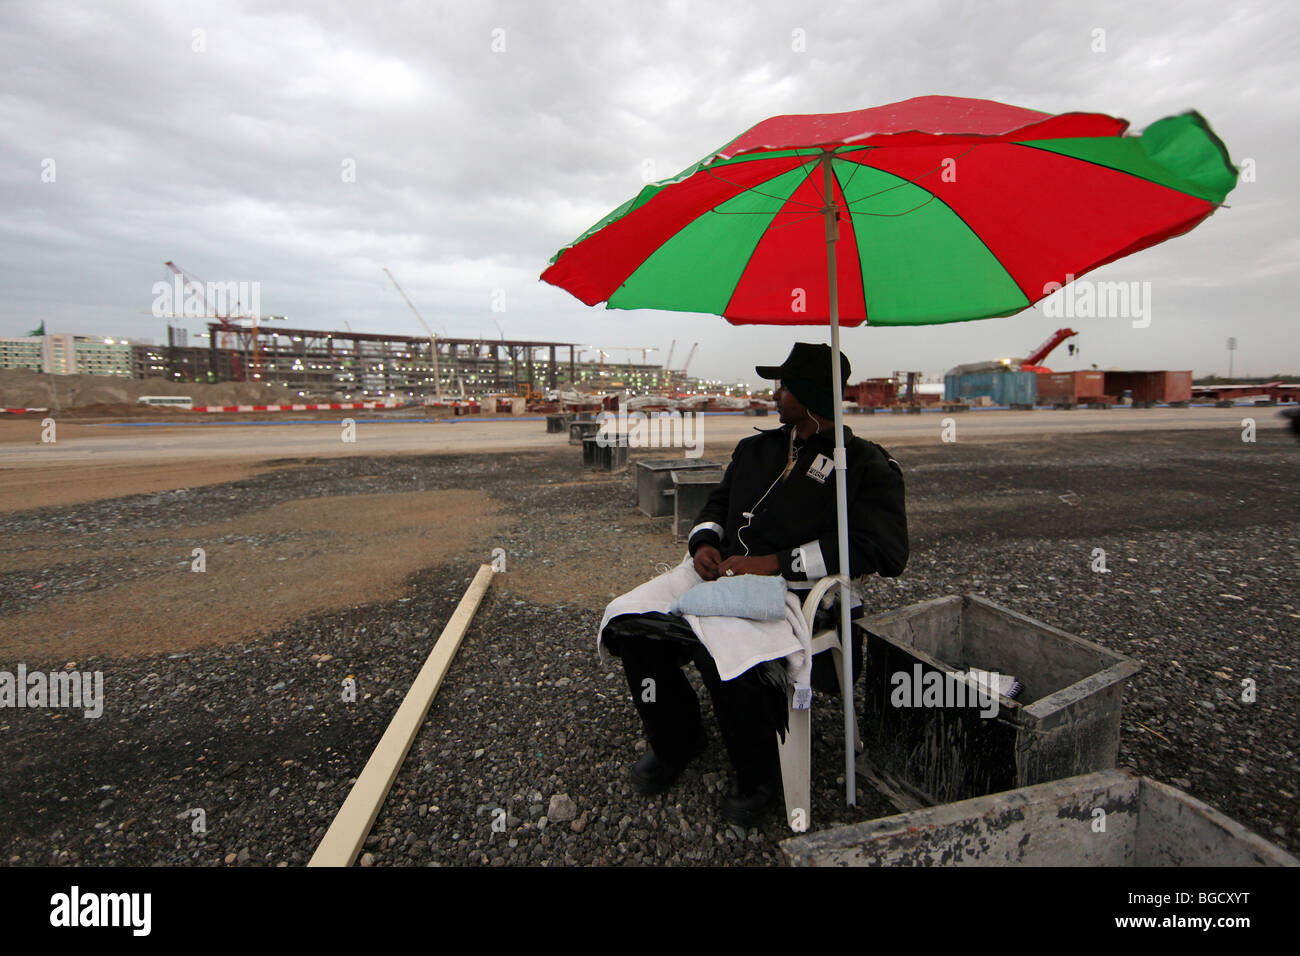 A man sitting under a parasol in bad weather, Dubai, United Arab Emirates Stock Photo